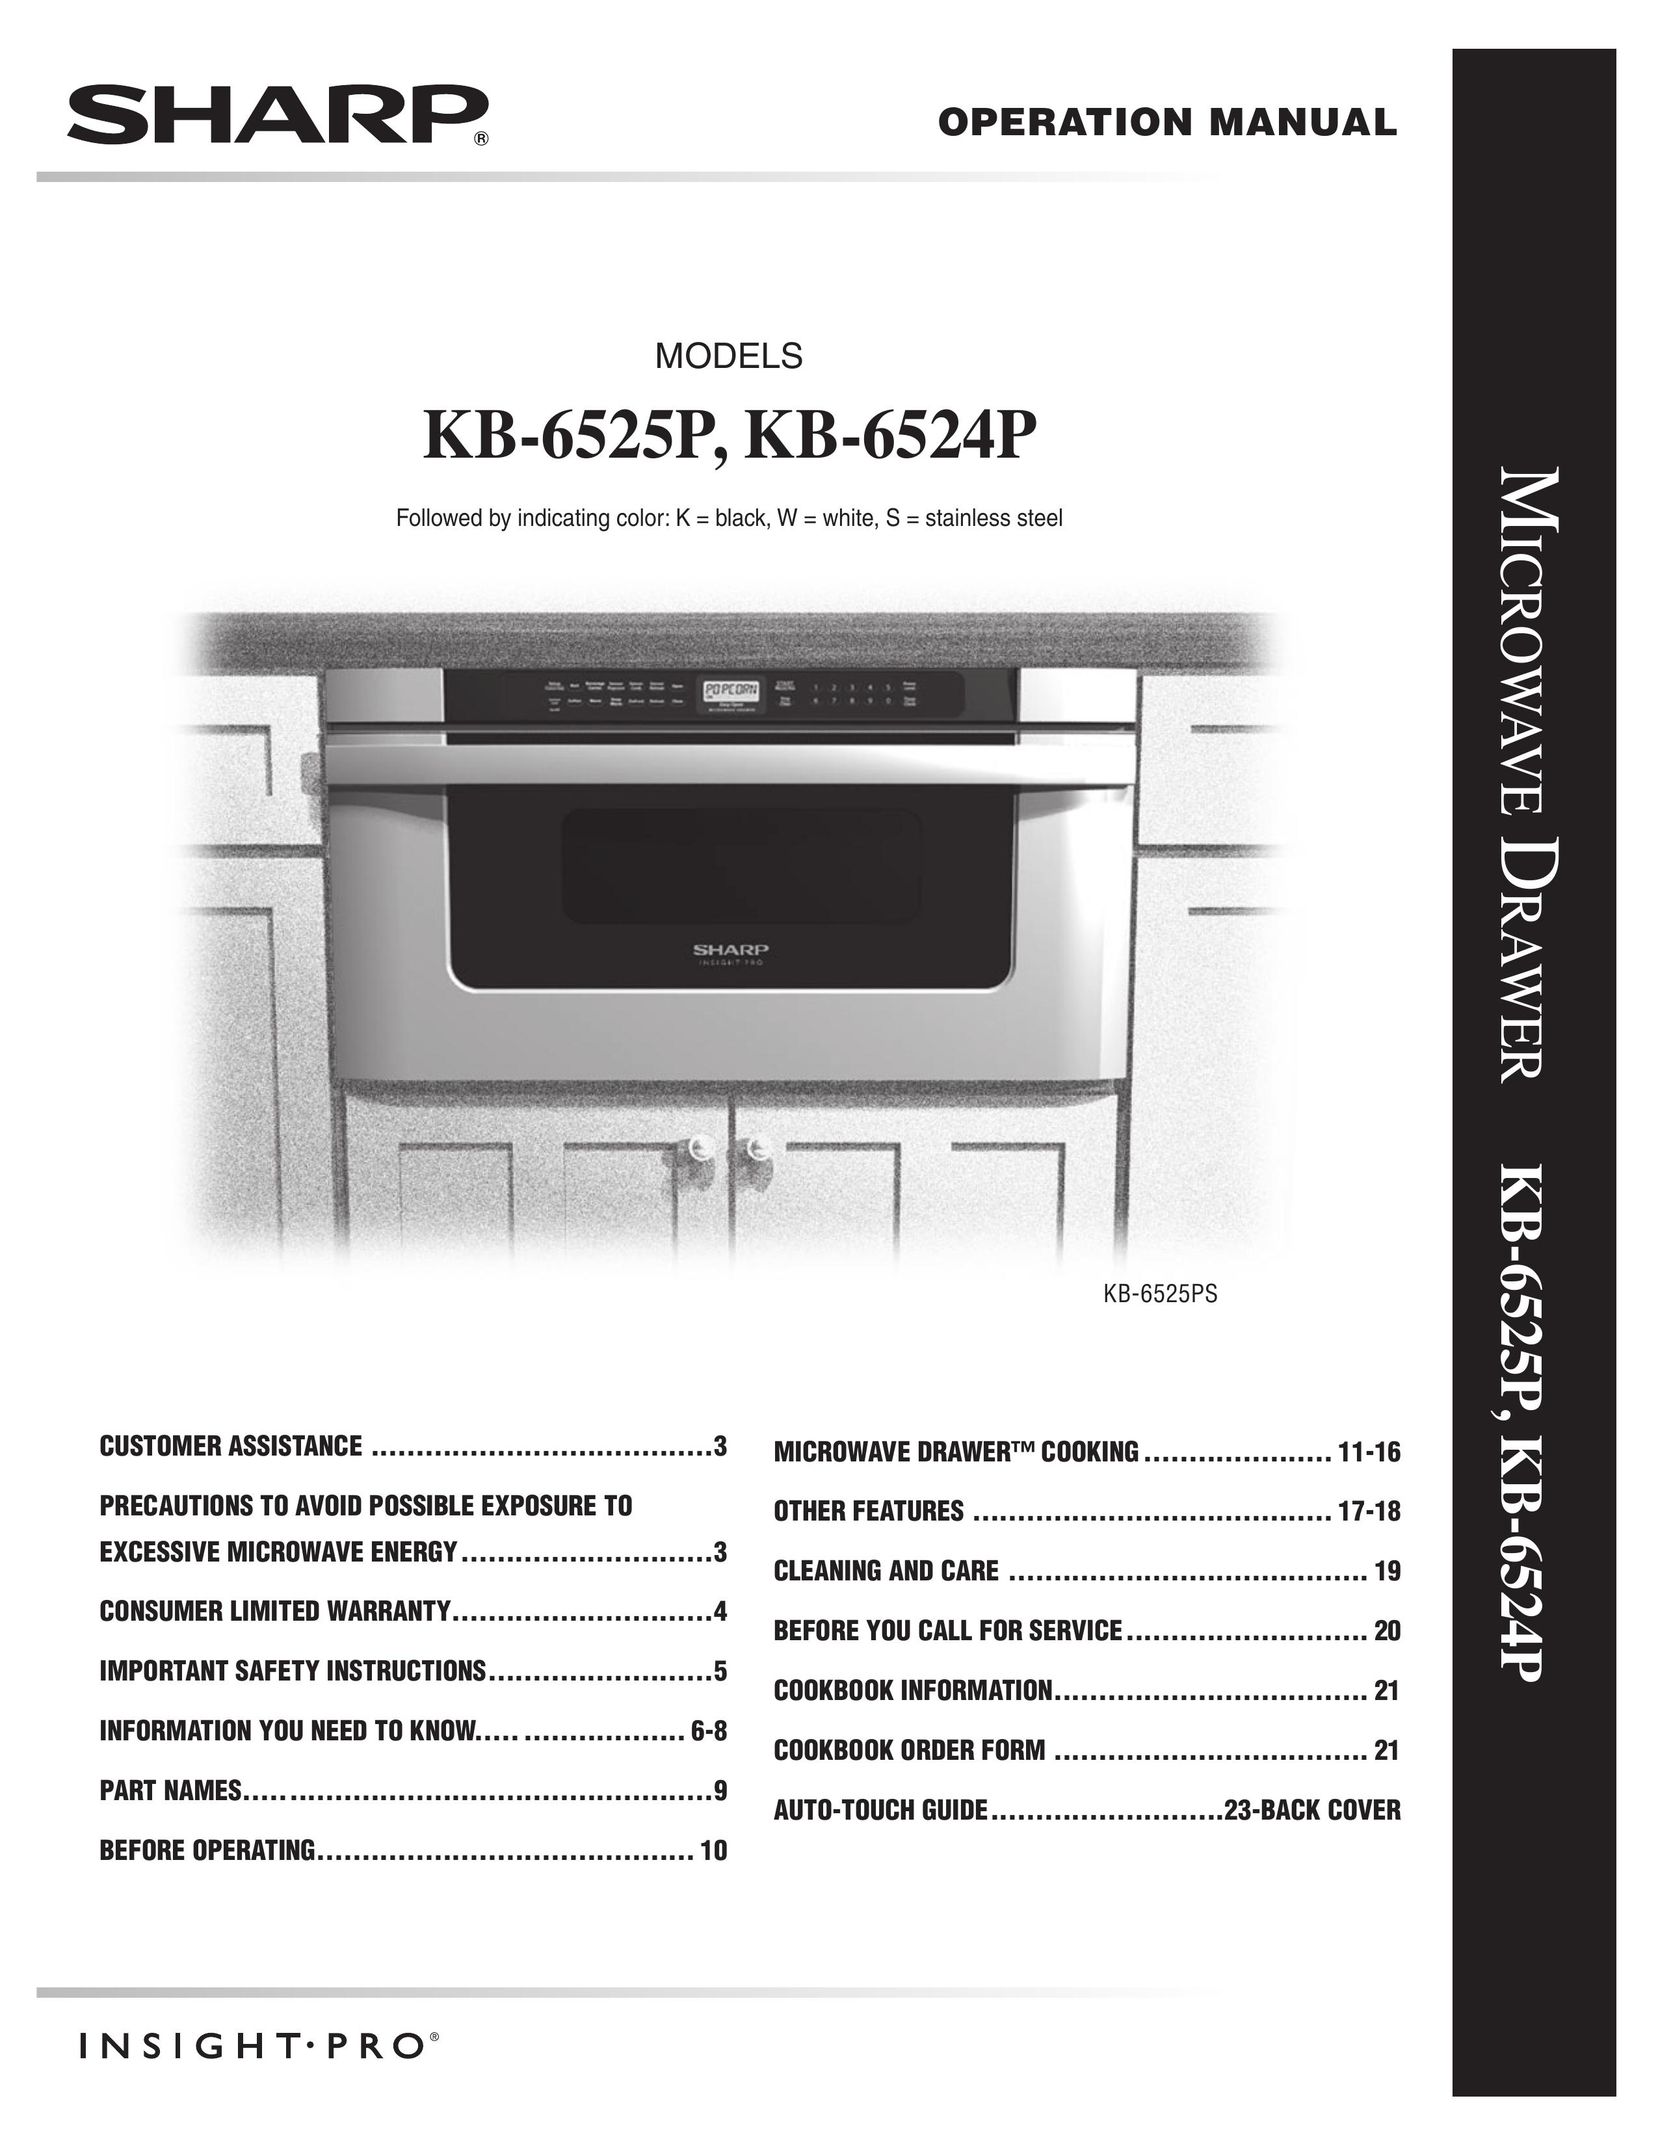 Sharp KB-6525P Microwave Oven User Manual